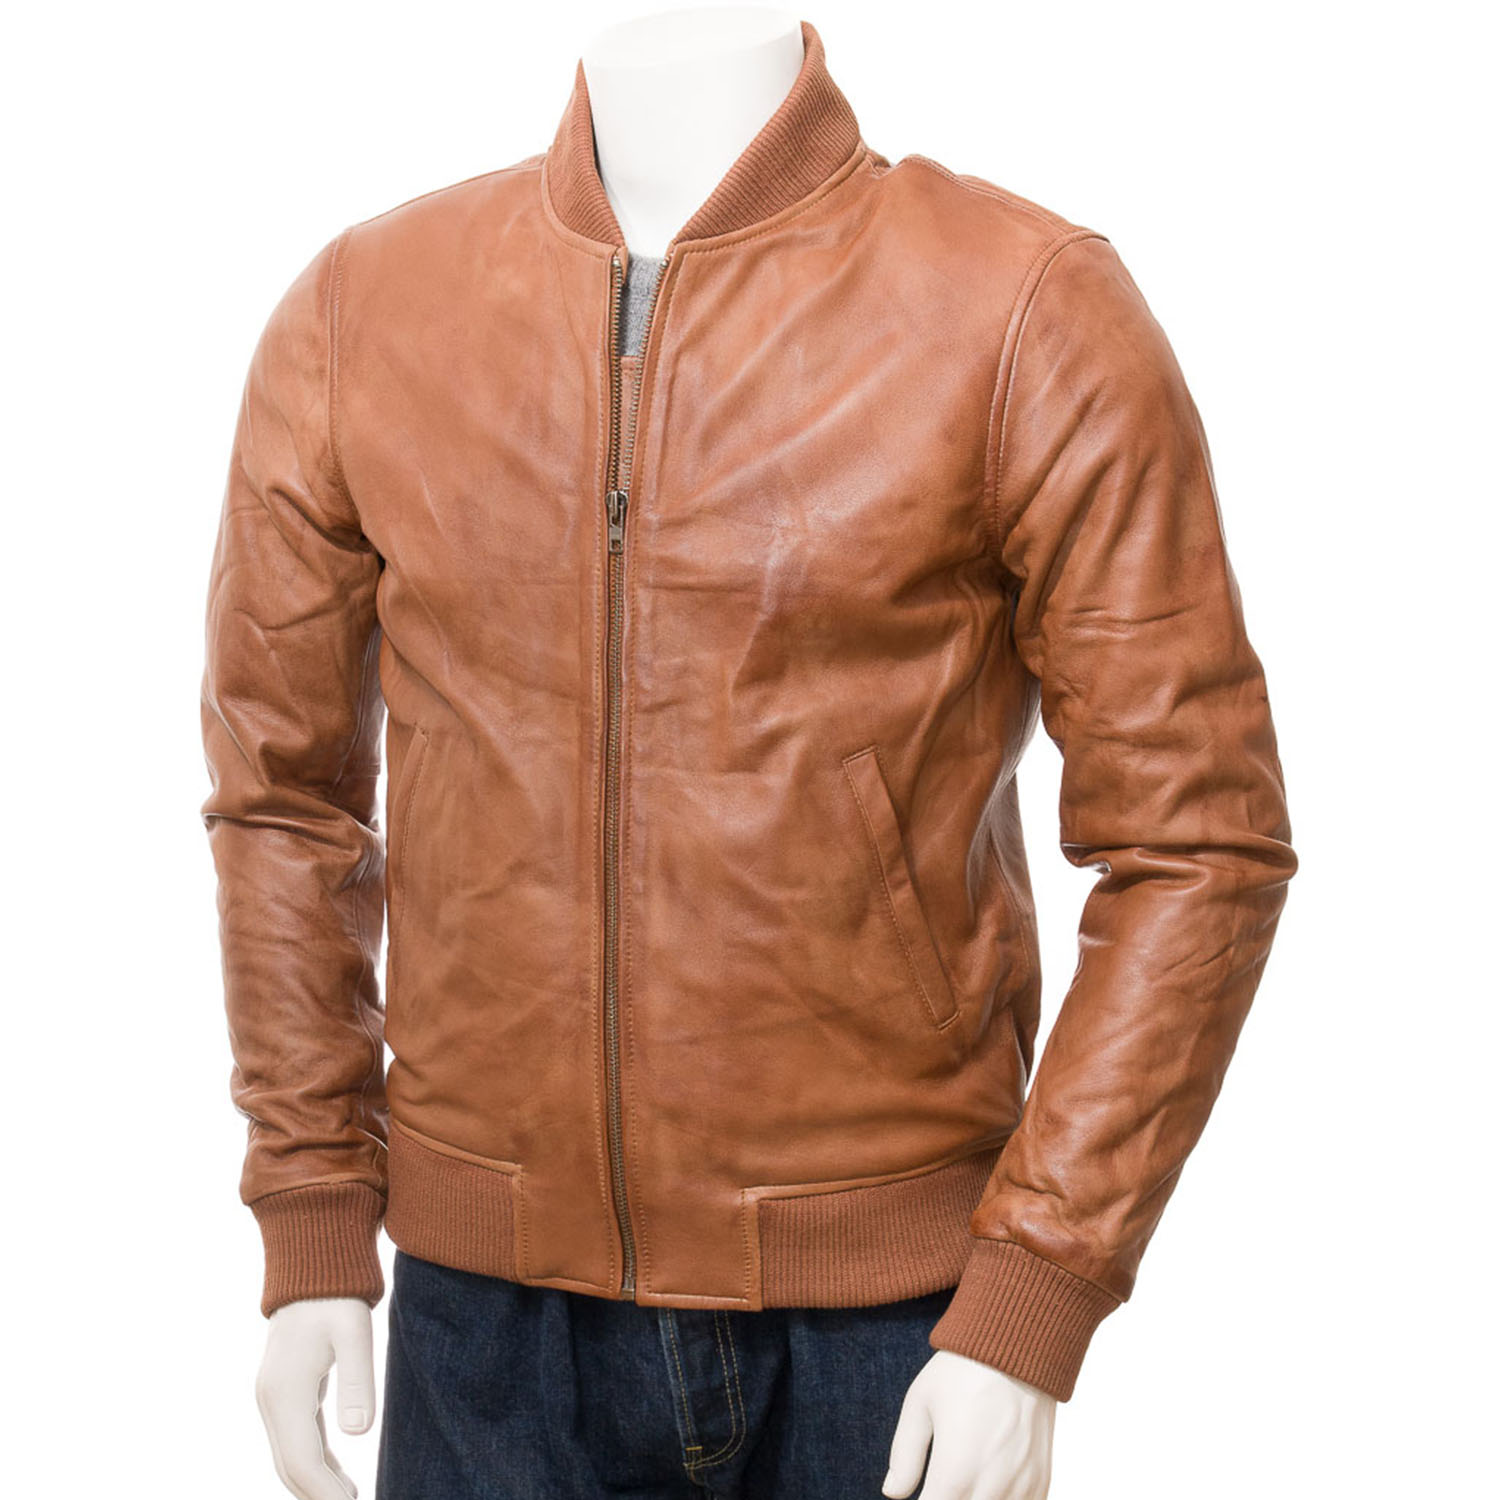 Men's Tan Leather Bomber Jacket - Blazon Leather